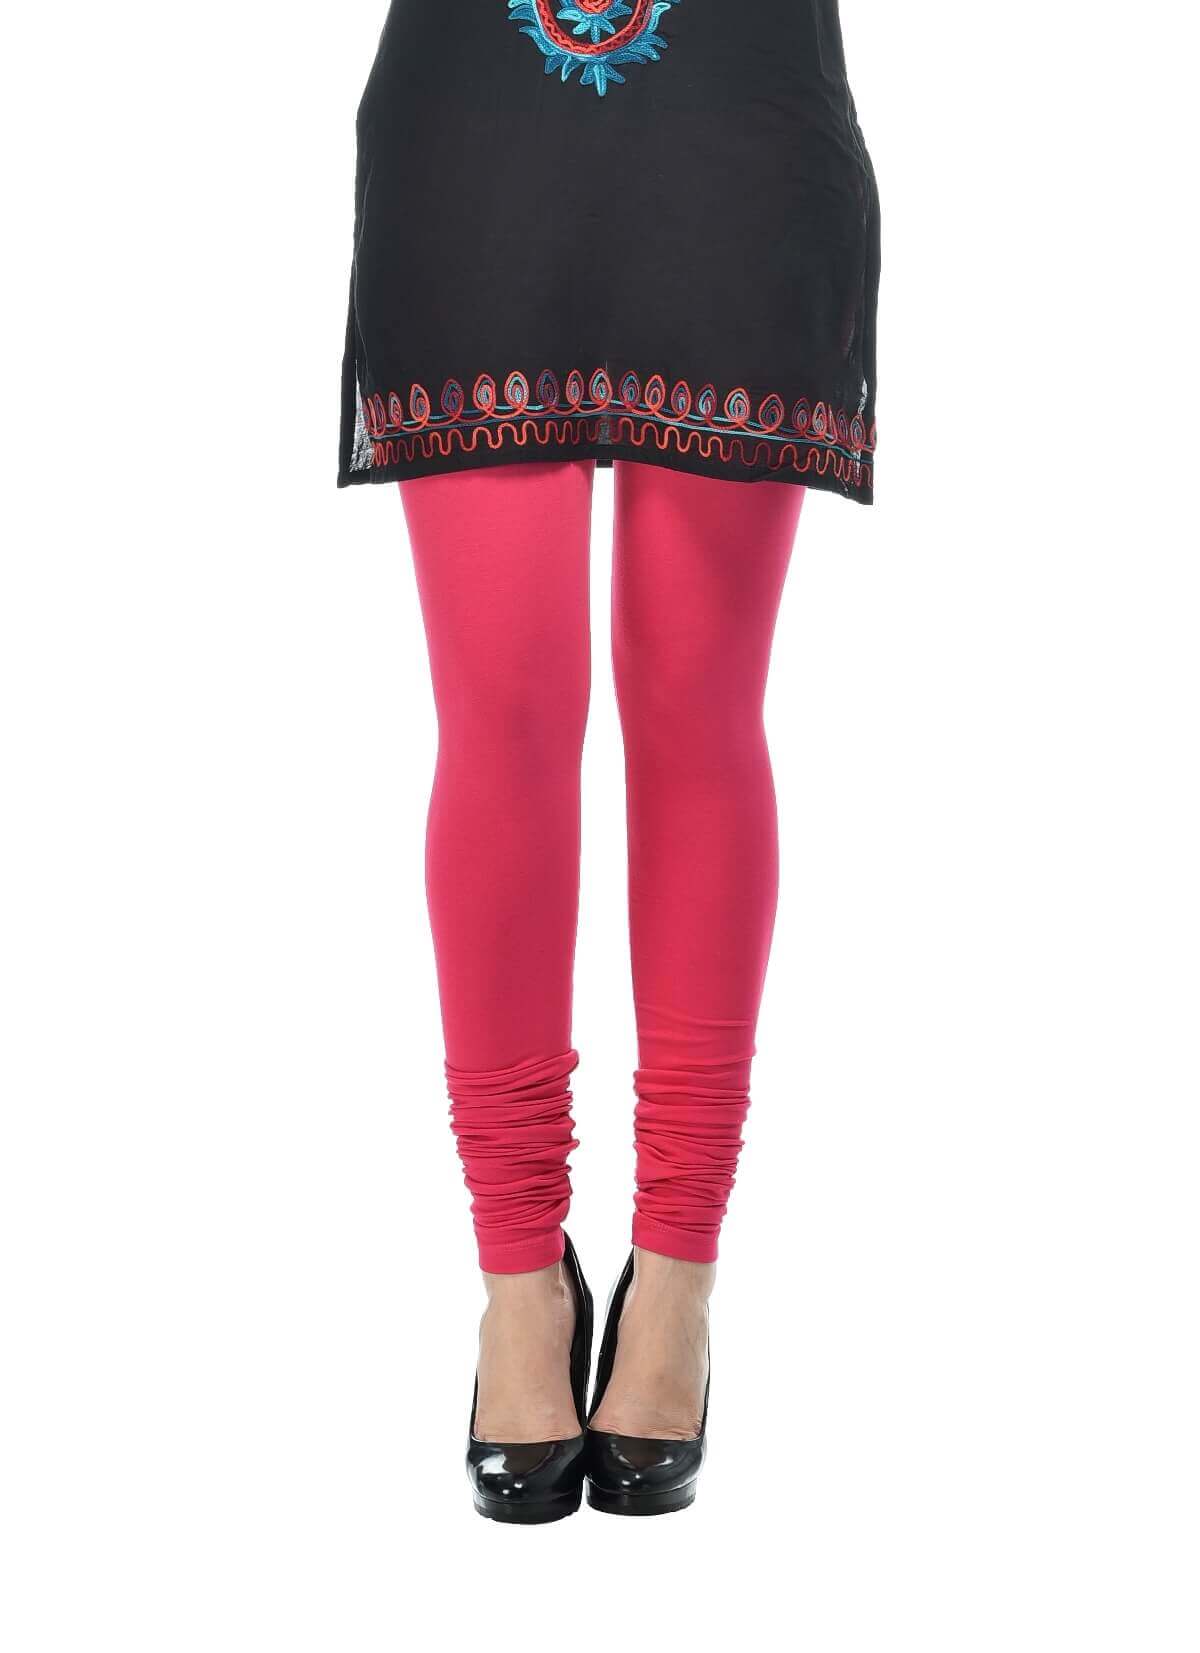 https://frenchtrendz.com/images/thumbs/0000611_frenchtrendz-cotton-spandex-swe-pink-churidar-leggings.jpeg